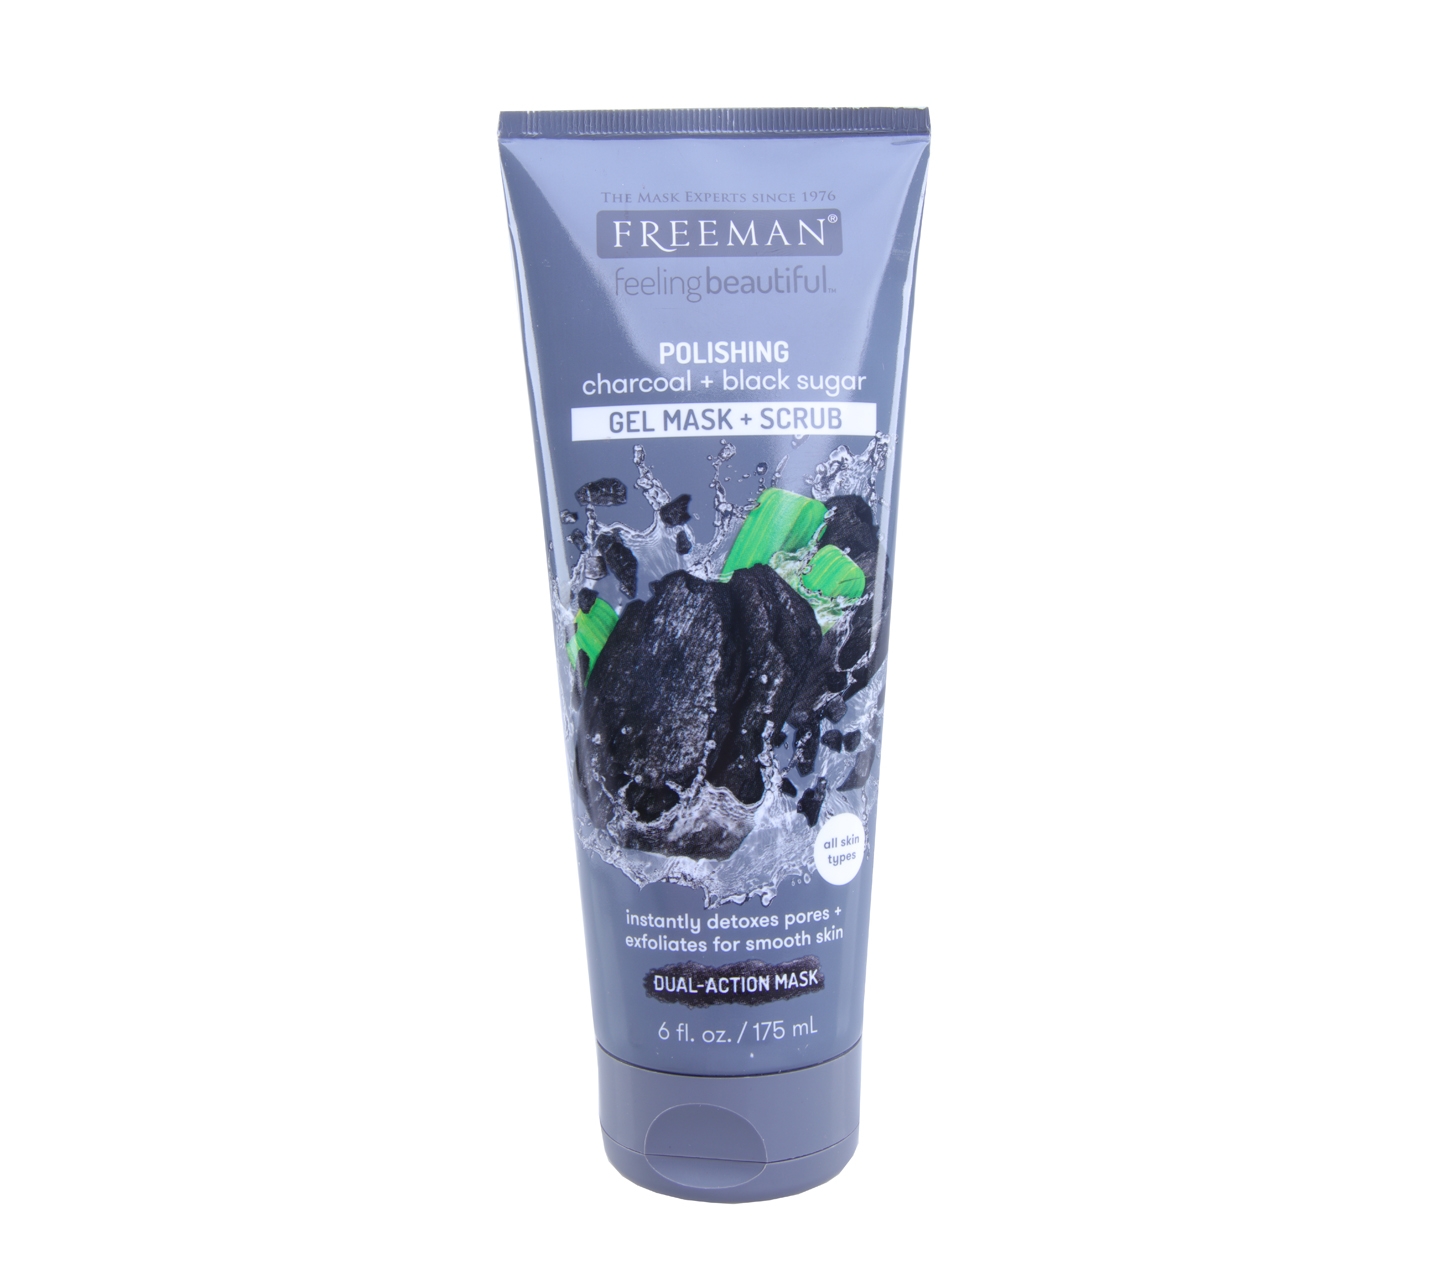 Freeman Polishing Charcoal + Black Sugar Gel Mask + Scrub Skin Care